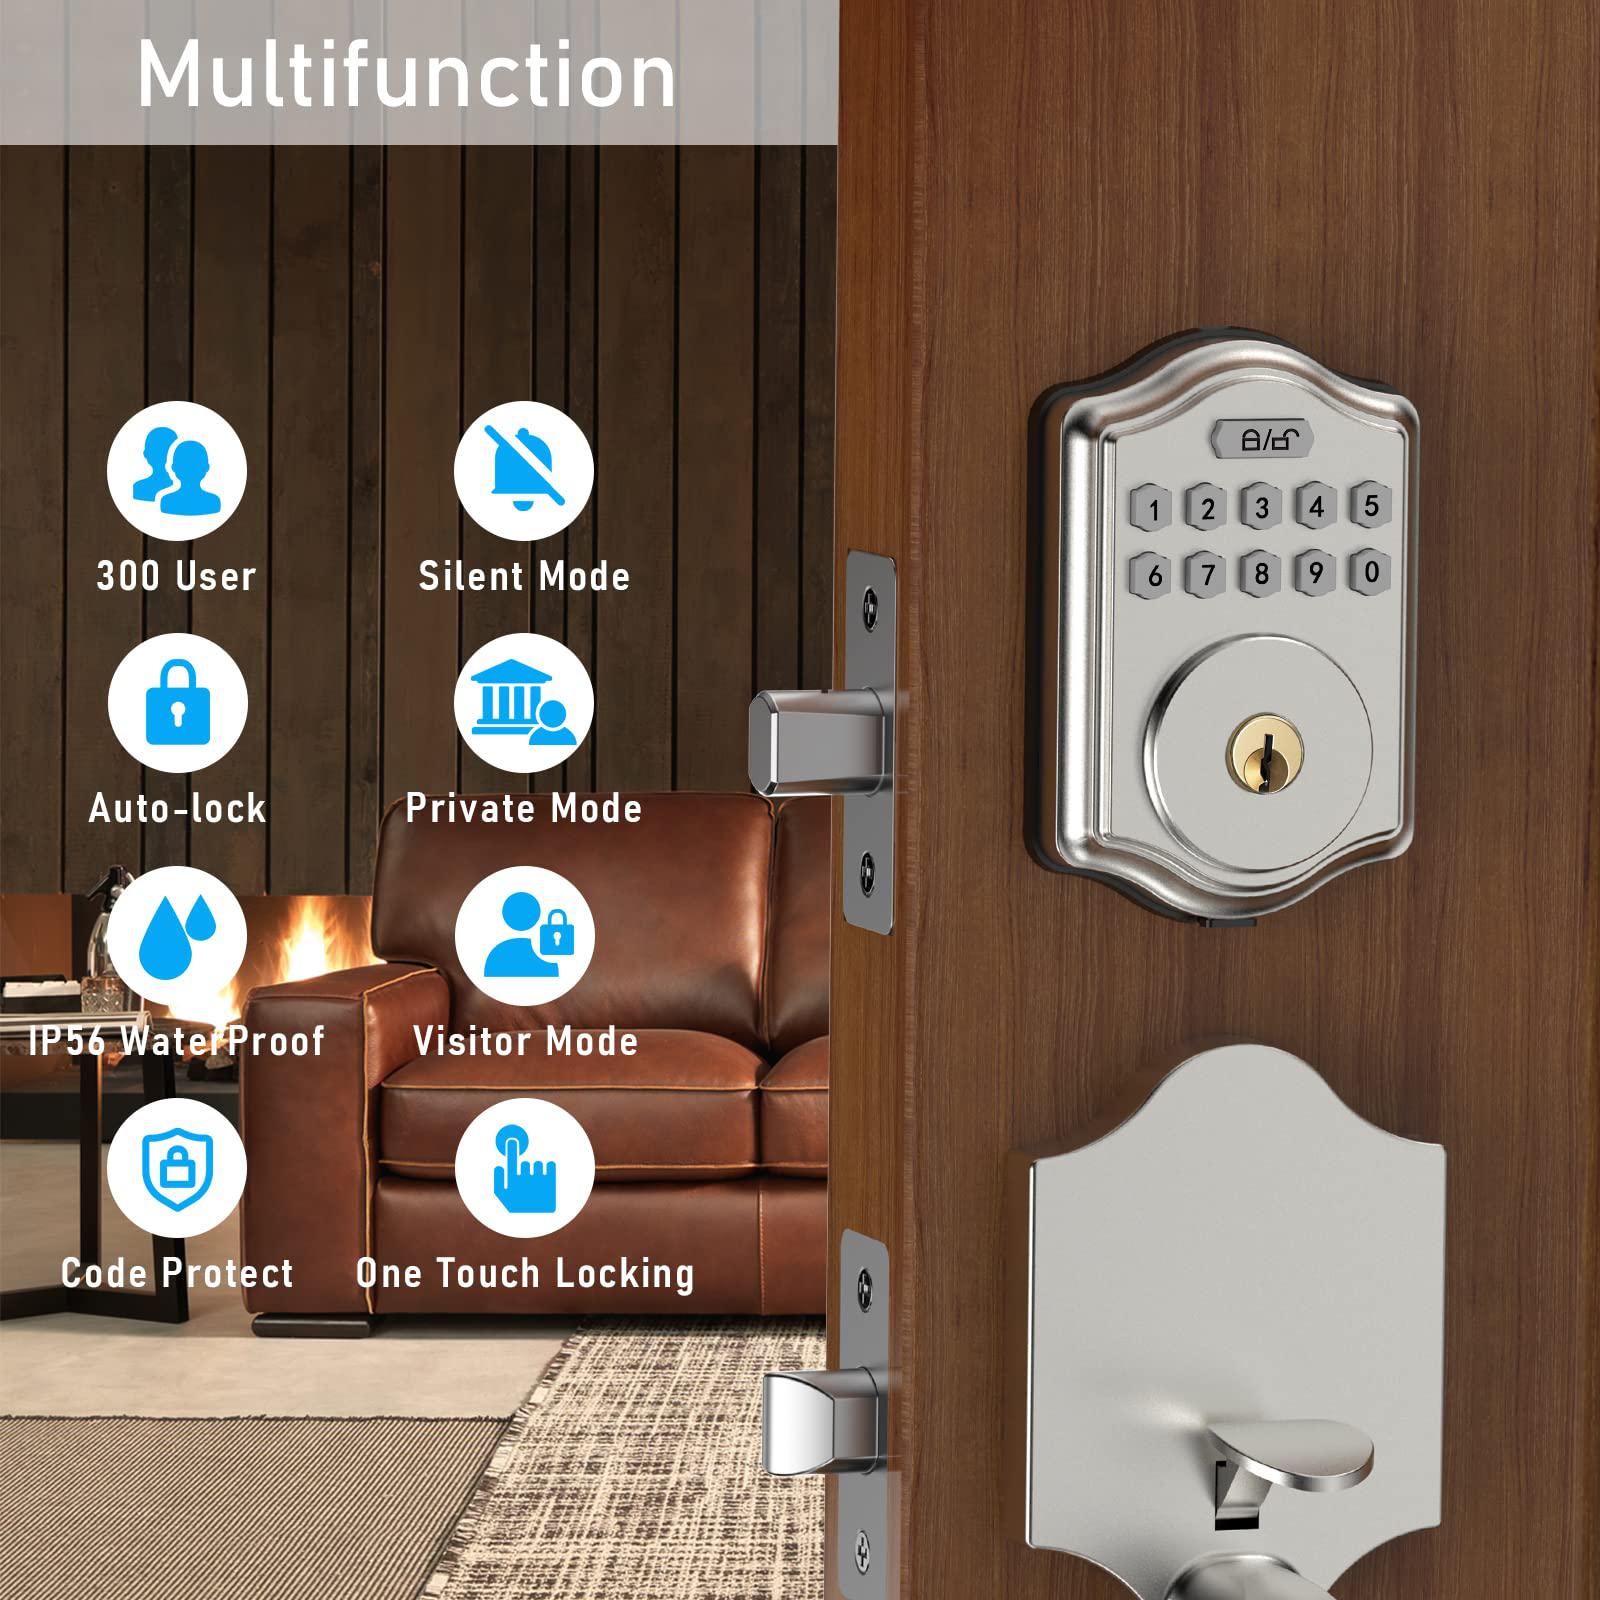 guarder keyless entry door lock, smart deadbolt with keypad code /key, deadbolt smart lock with 300 user,ip 56 waterproof fro